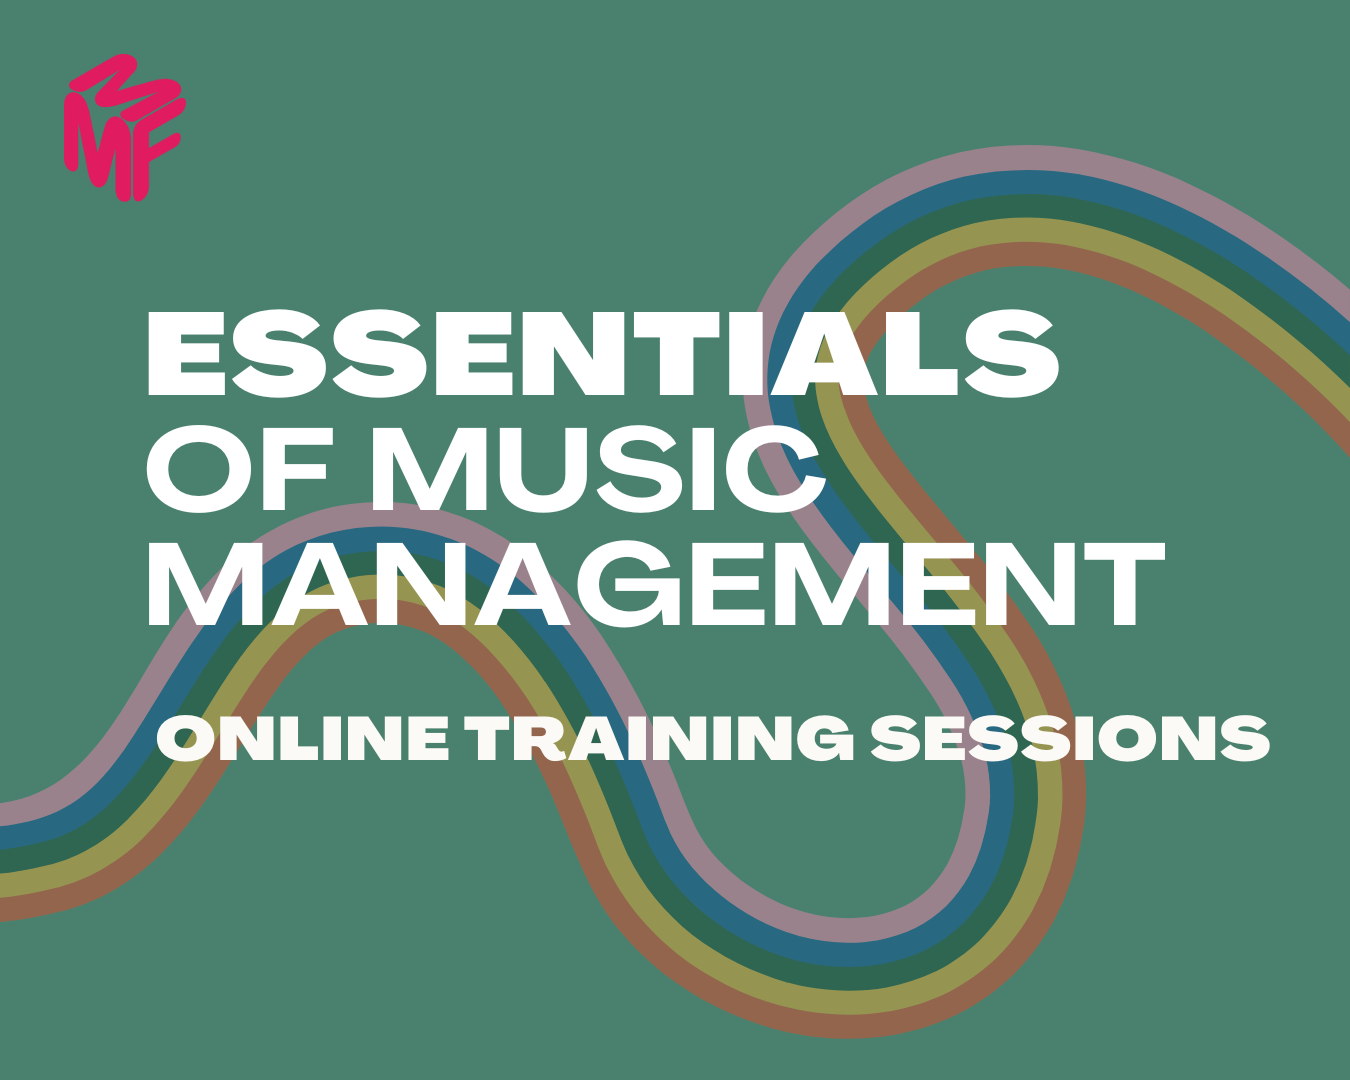 Essentials of Music Management Online Training